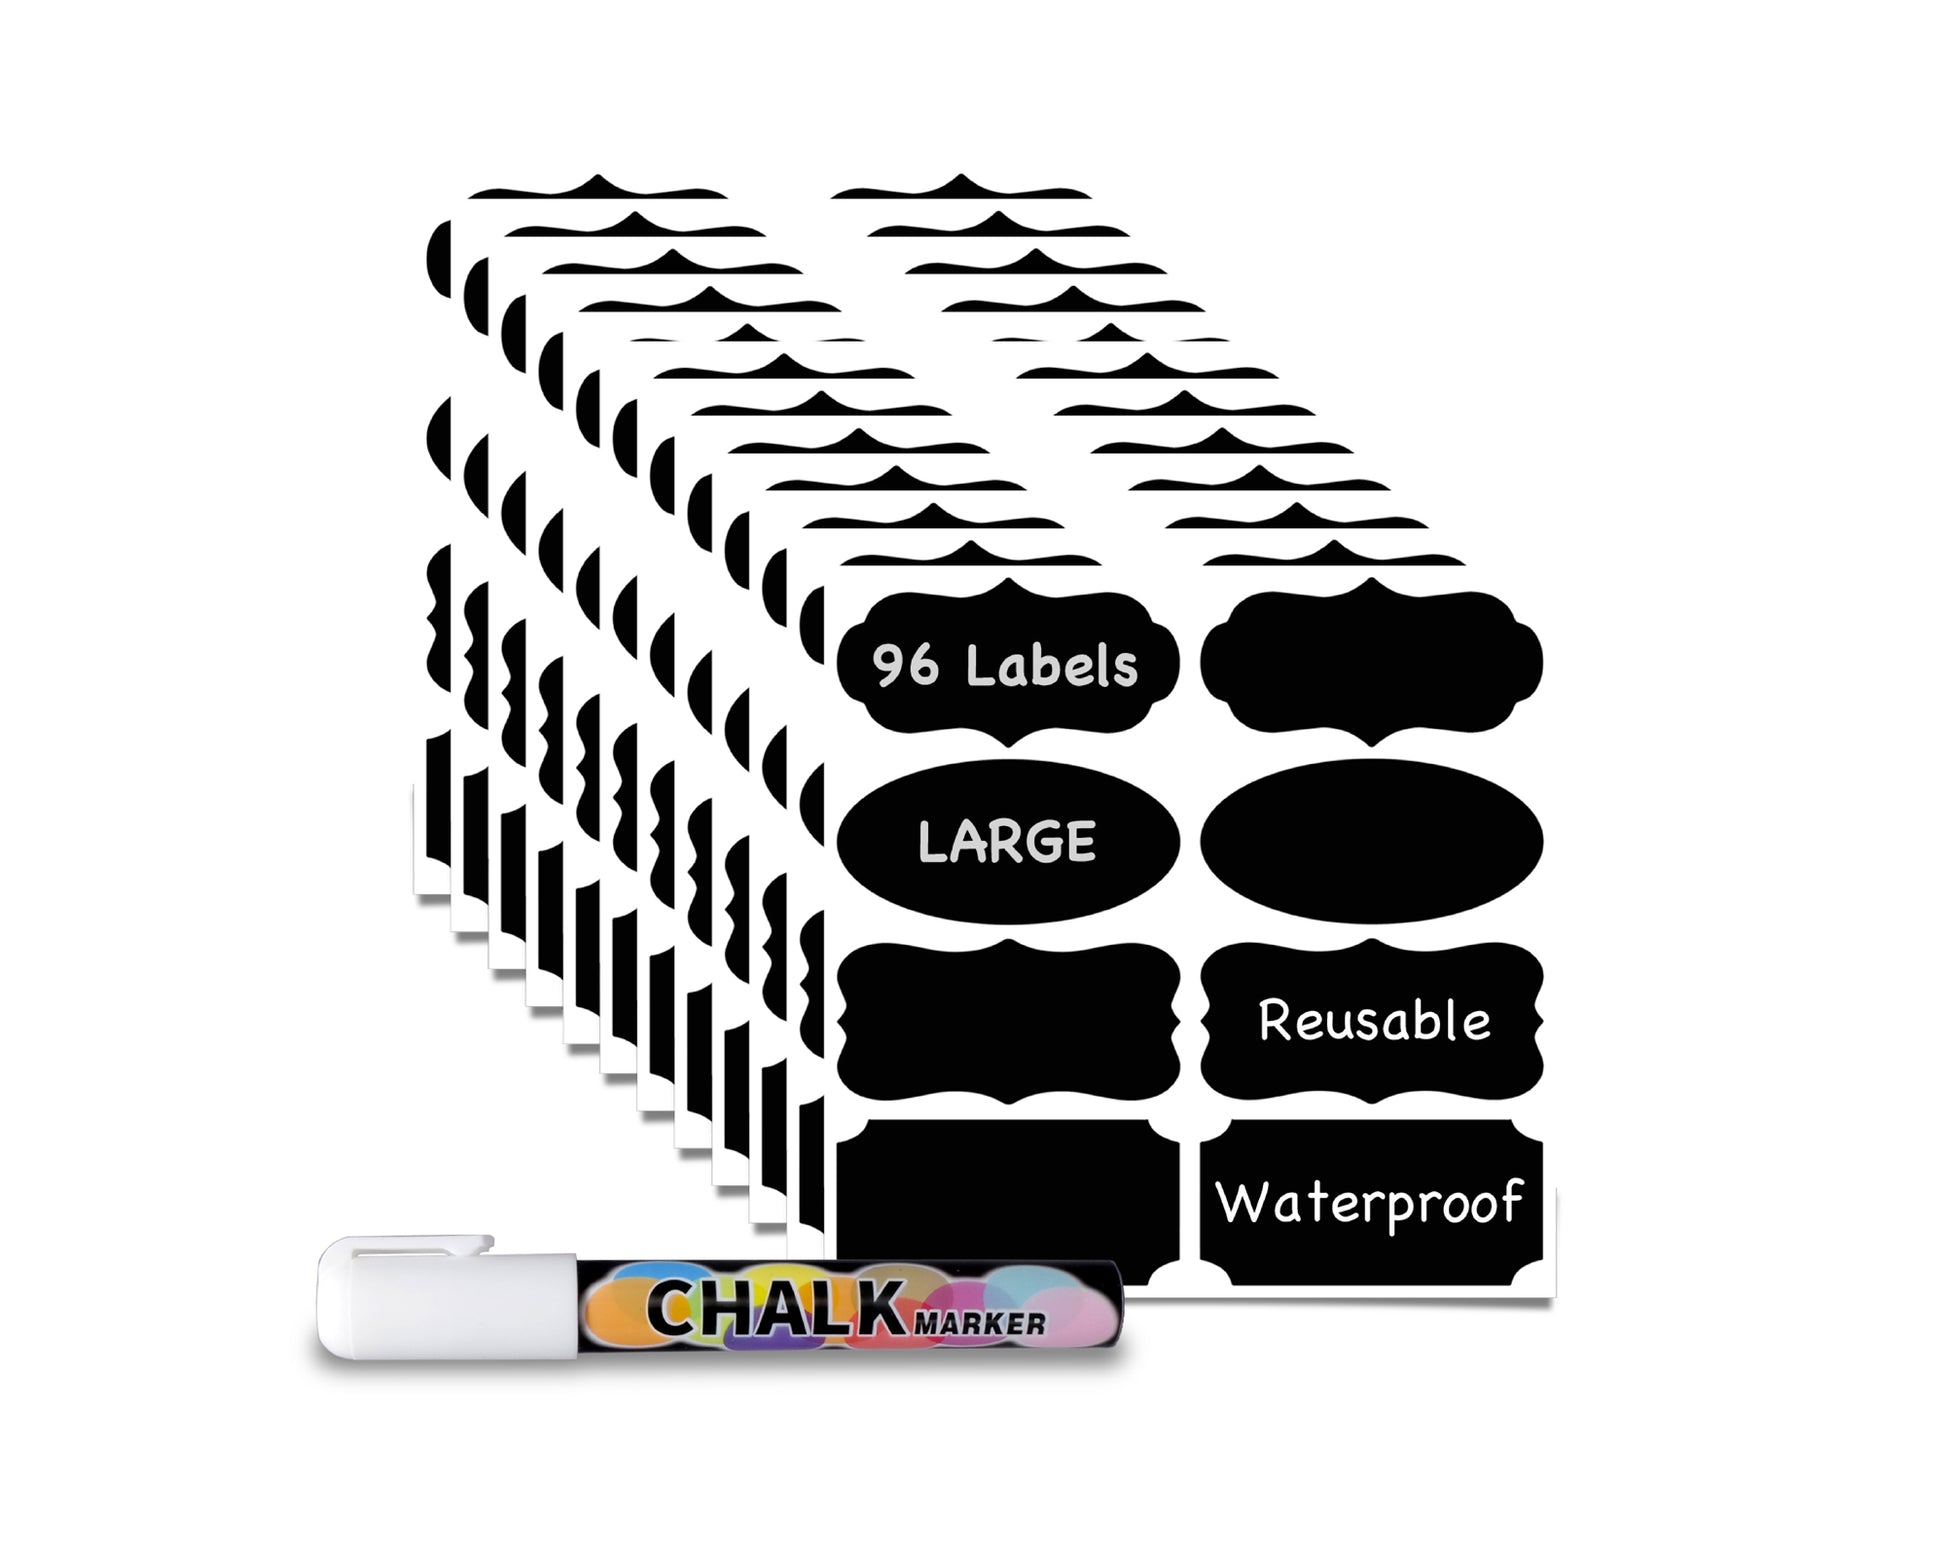 Chalkboard Labels for Jars 96Pc - Chalkboard Labels Stickers White Chalk  Marker